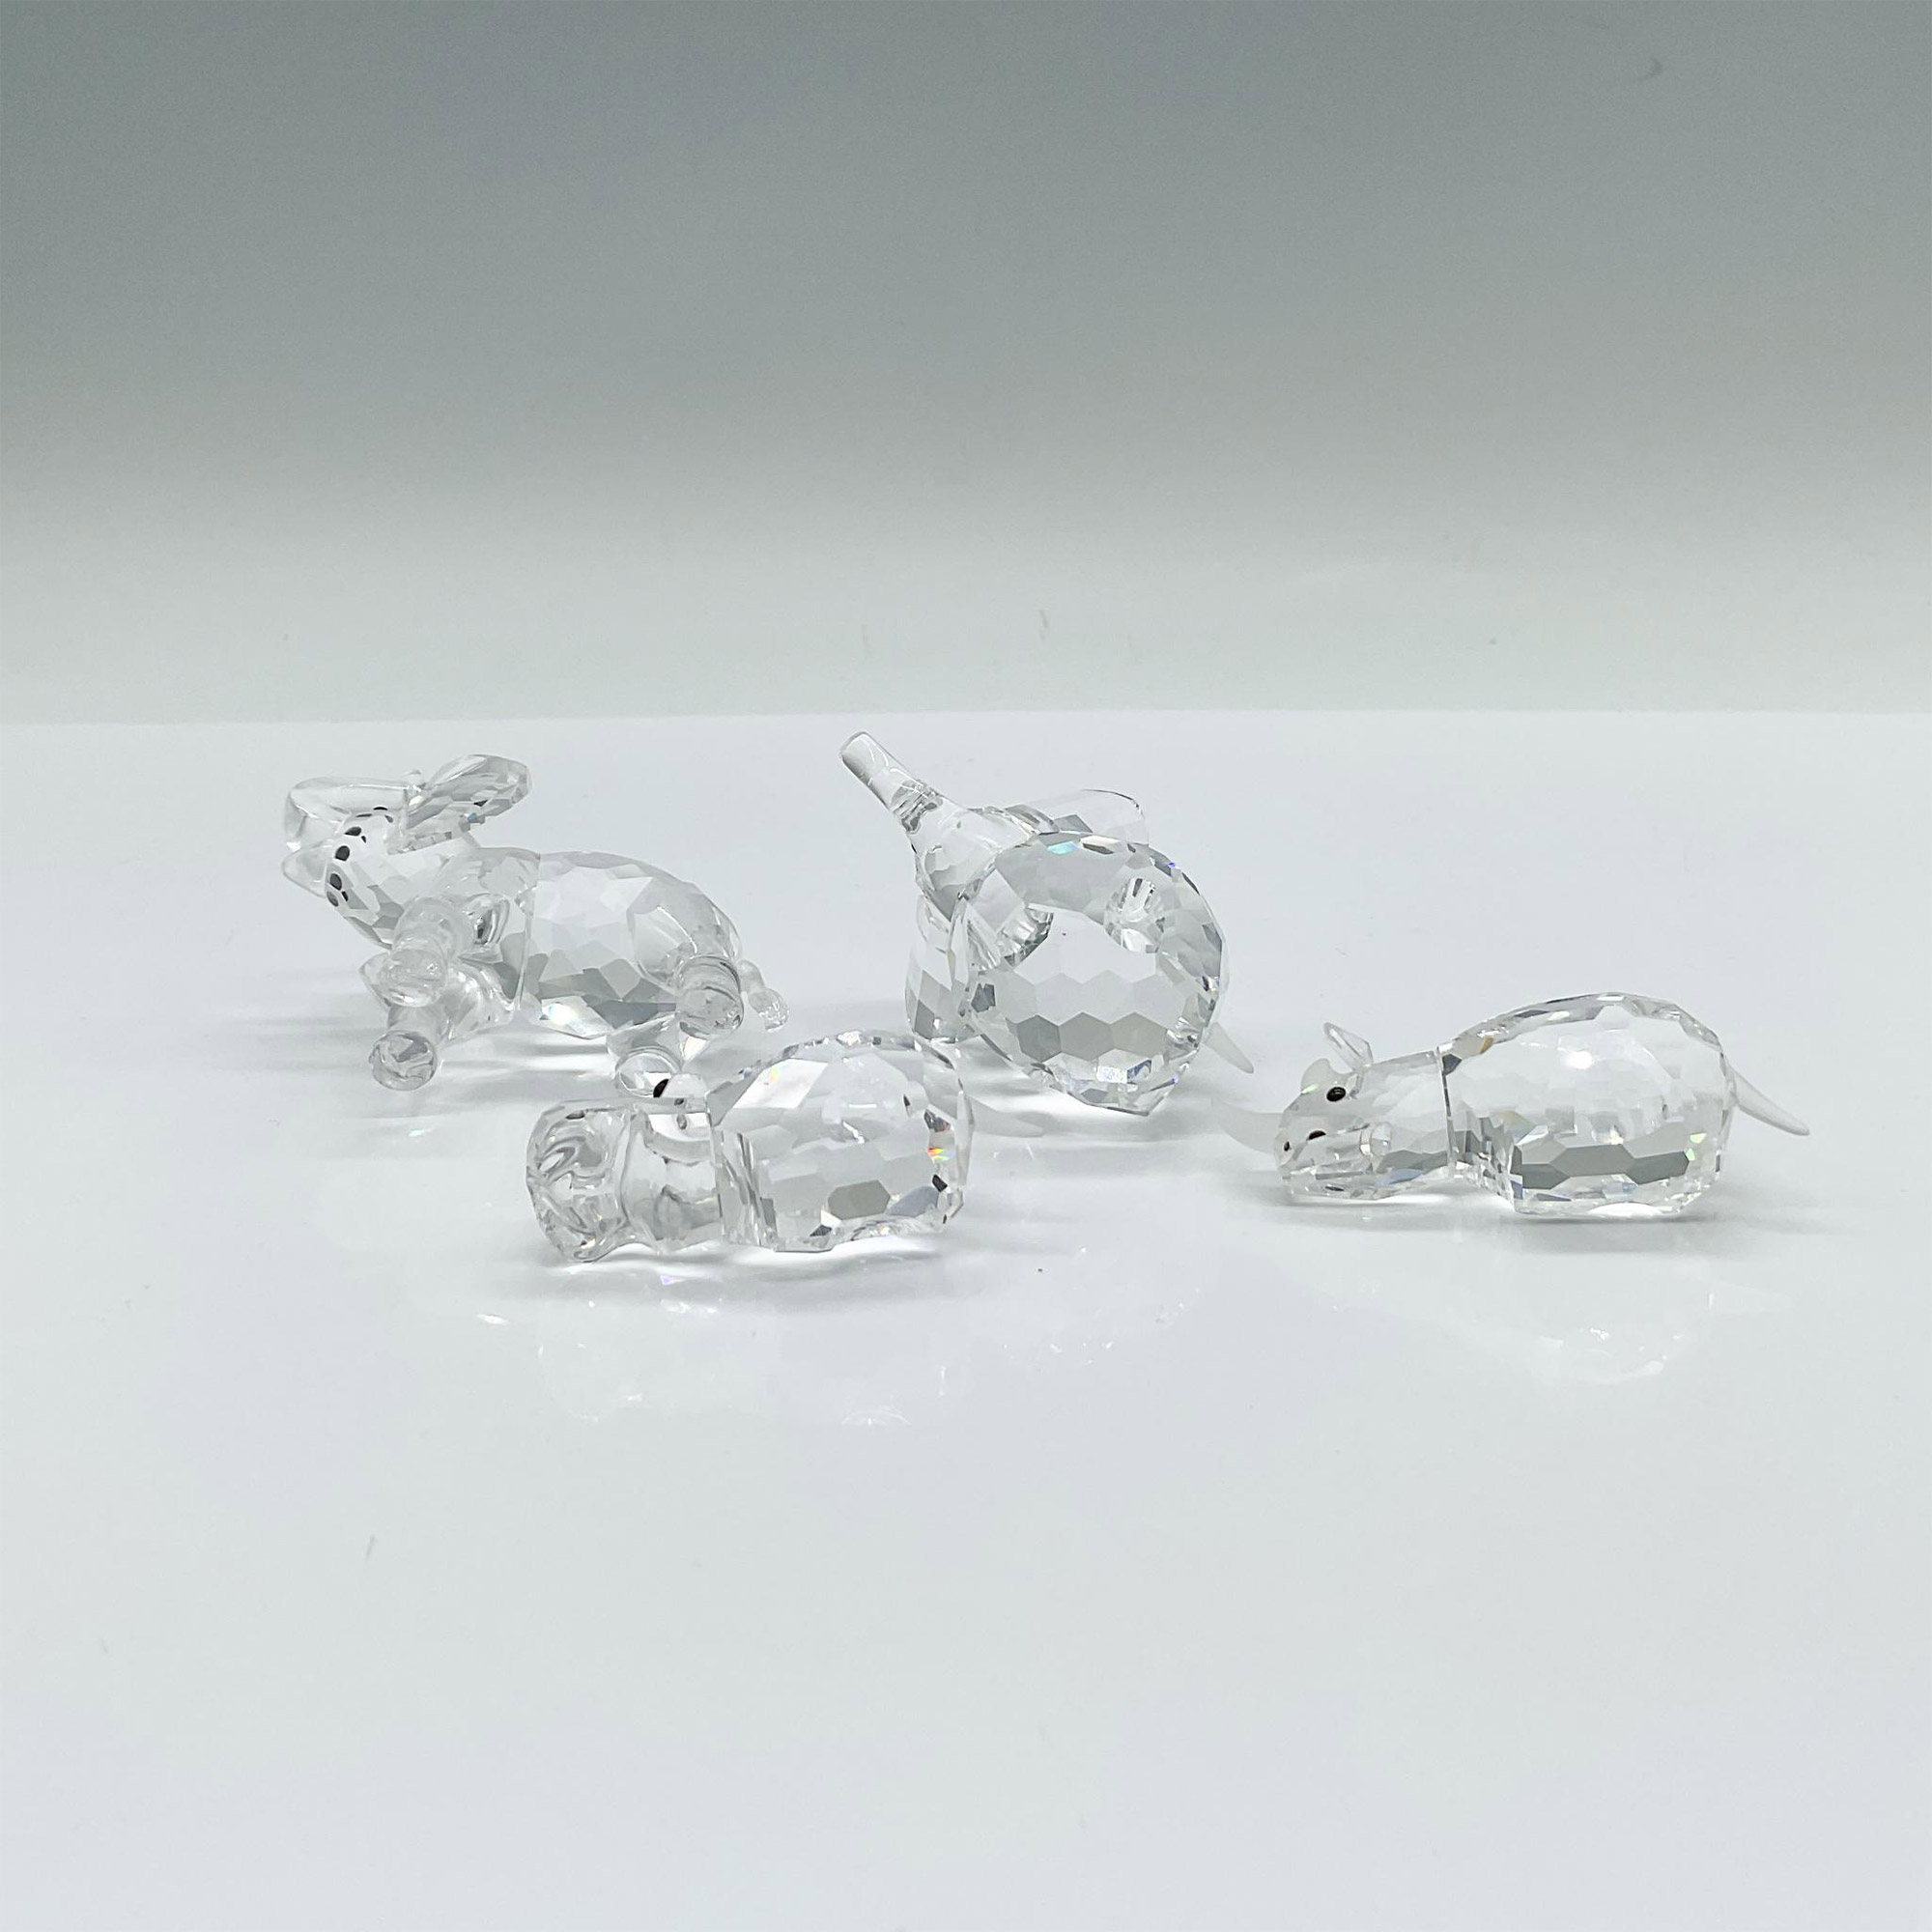 4pc Swarovski Crystal African Animal Figurines - Image 3 of 3